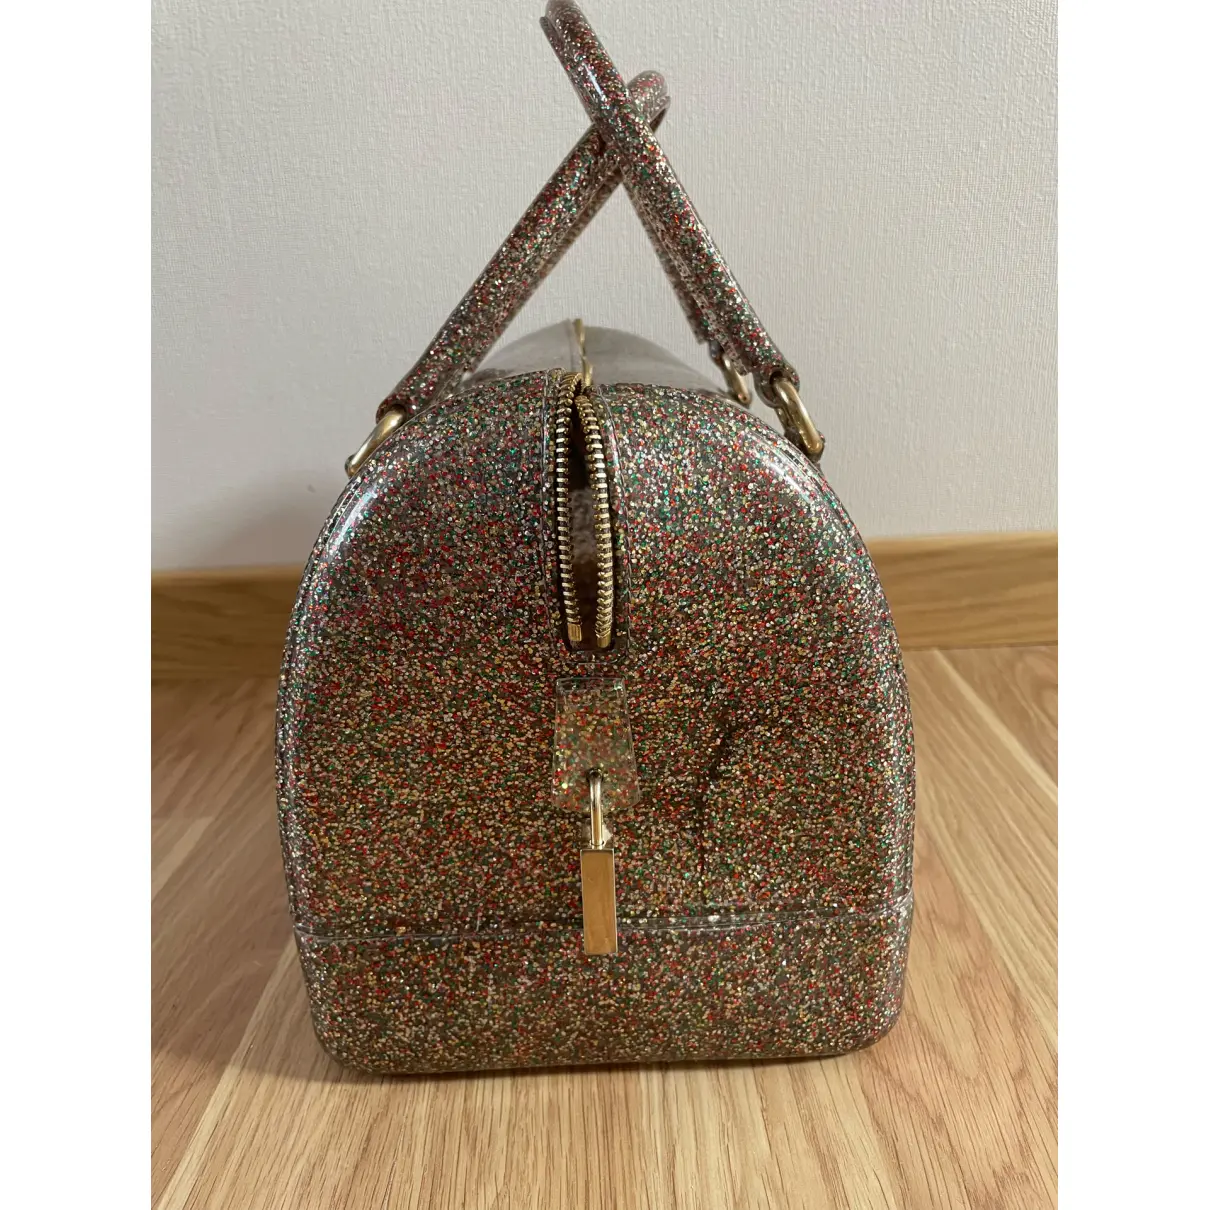 Buy Furla Candy Bag glitter handbag online